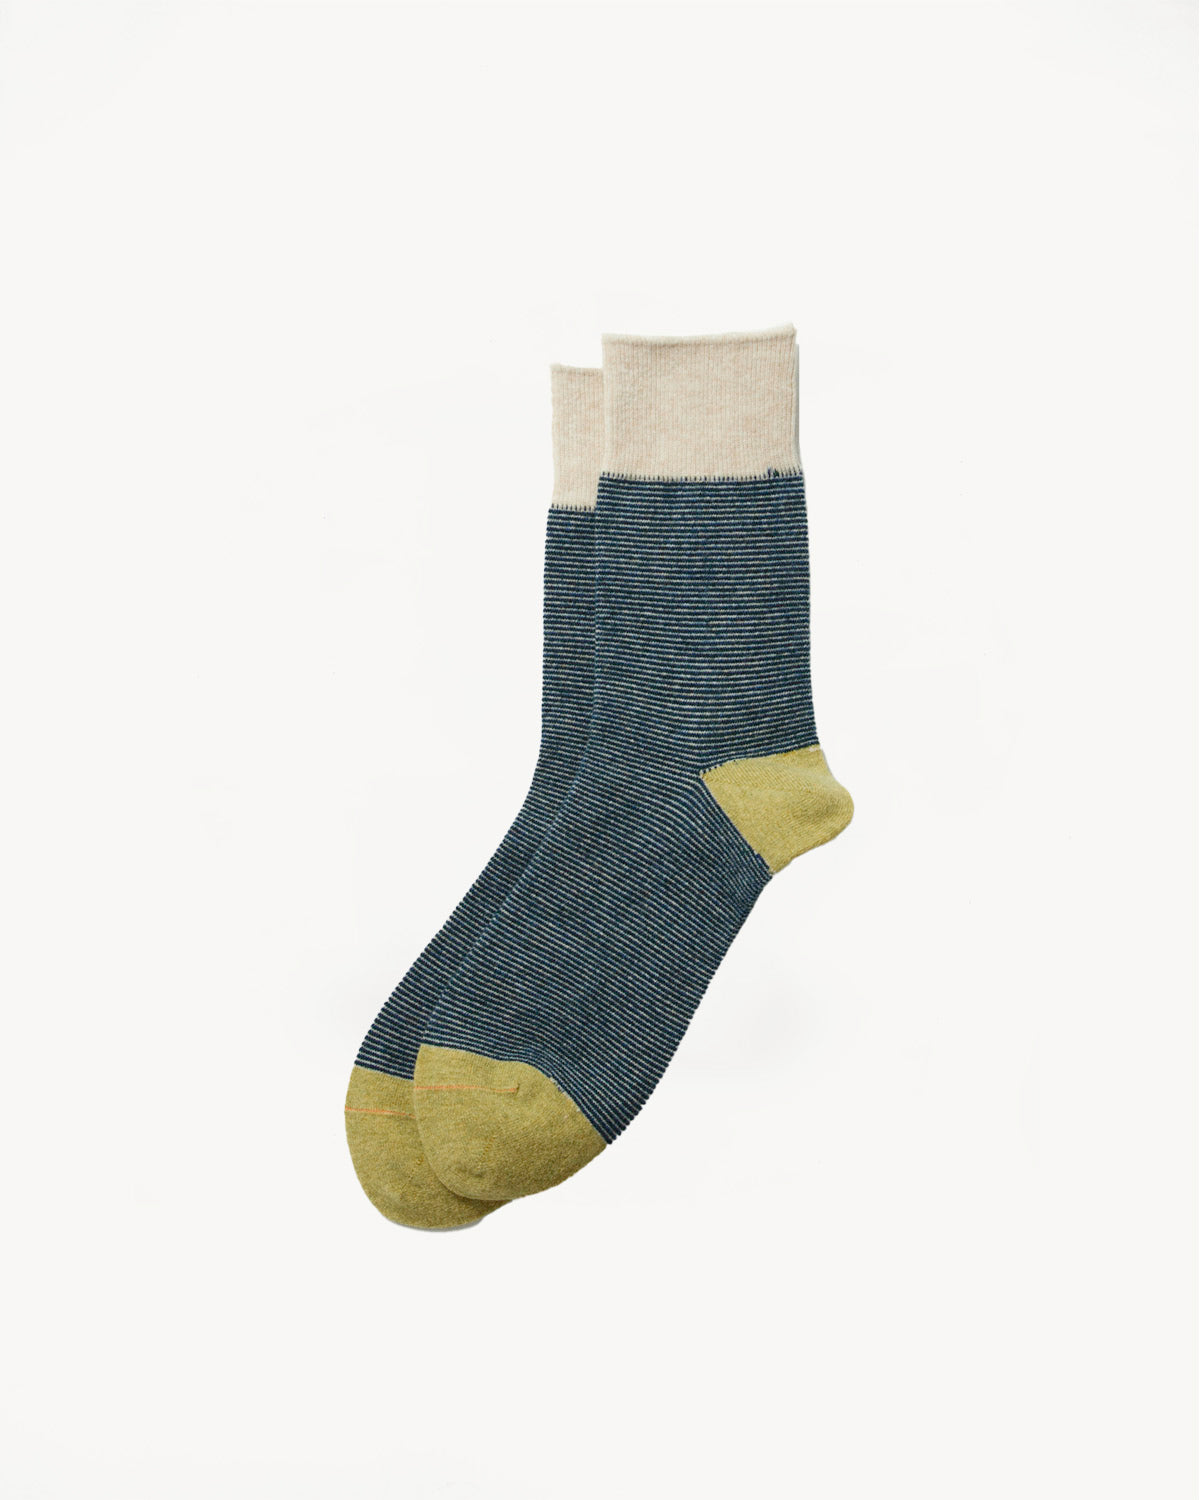 R1499 - Woolen Striped Retro Outdoor Socks - Ivory, Light Yellow